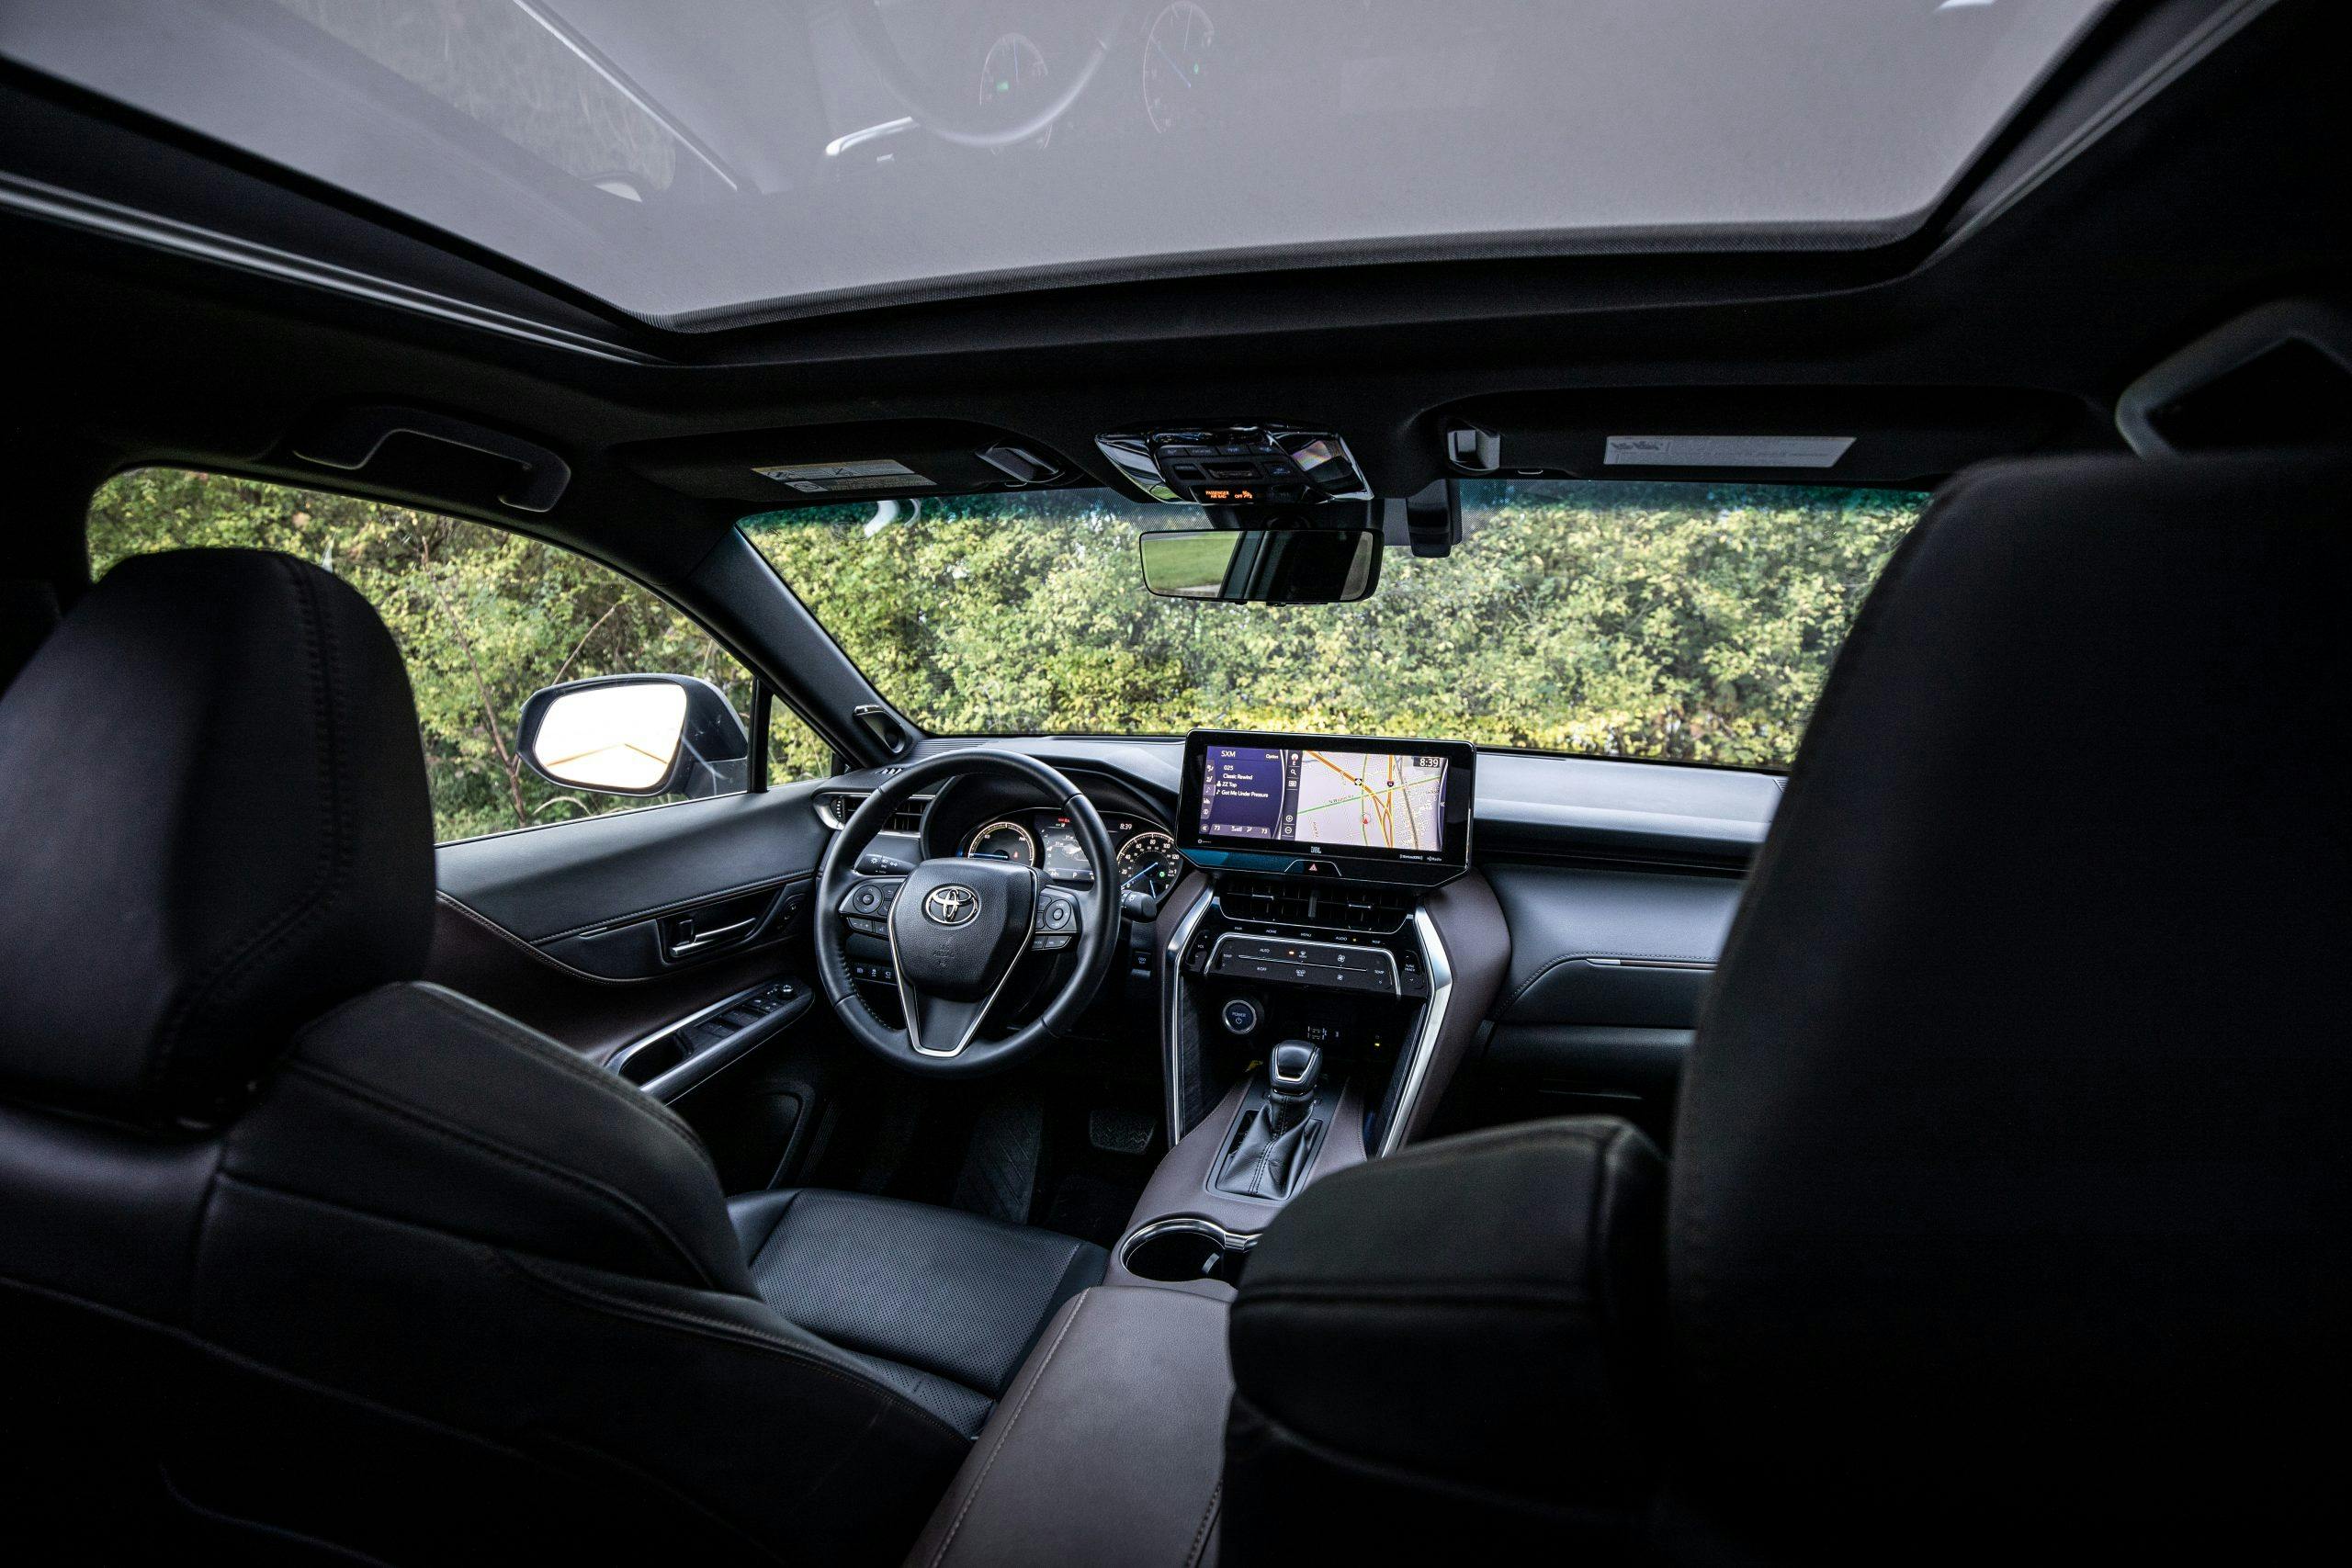 Toyota Venza interior front angle